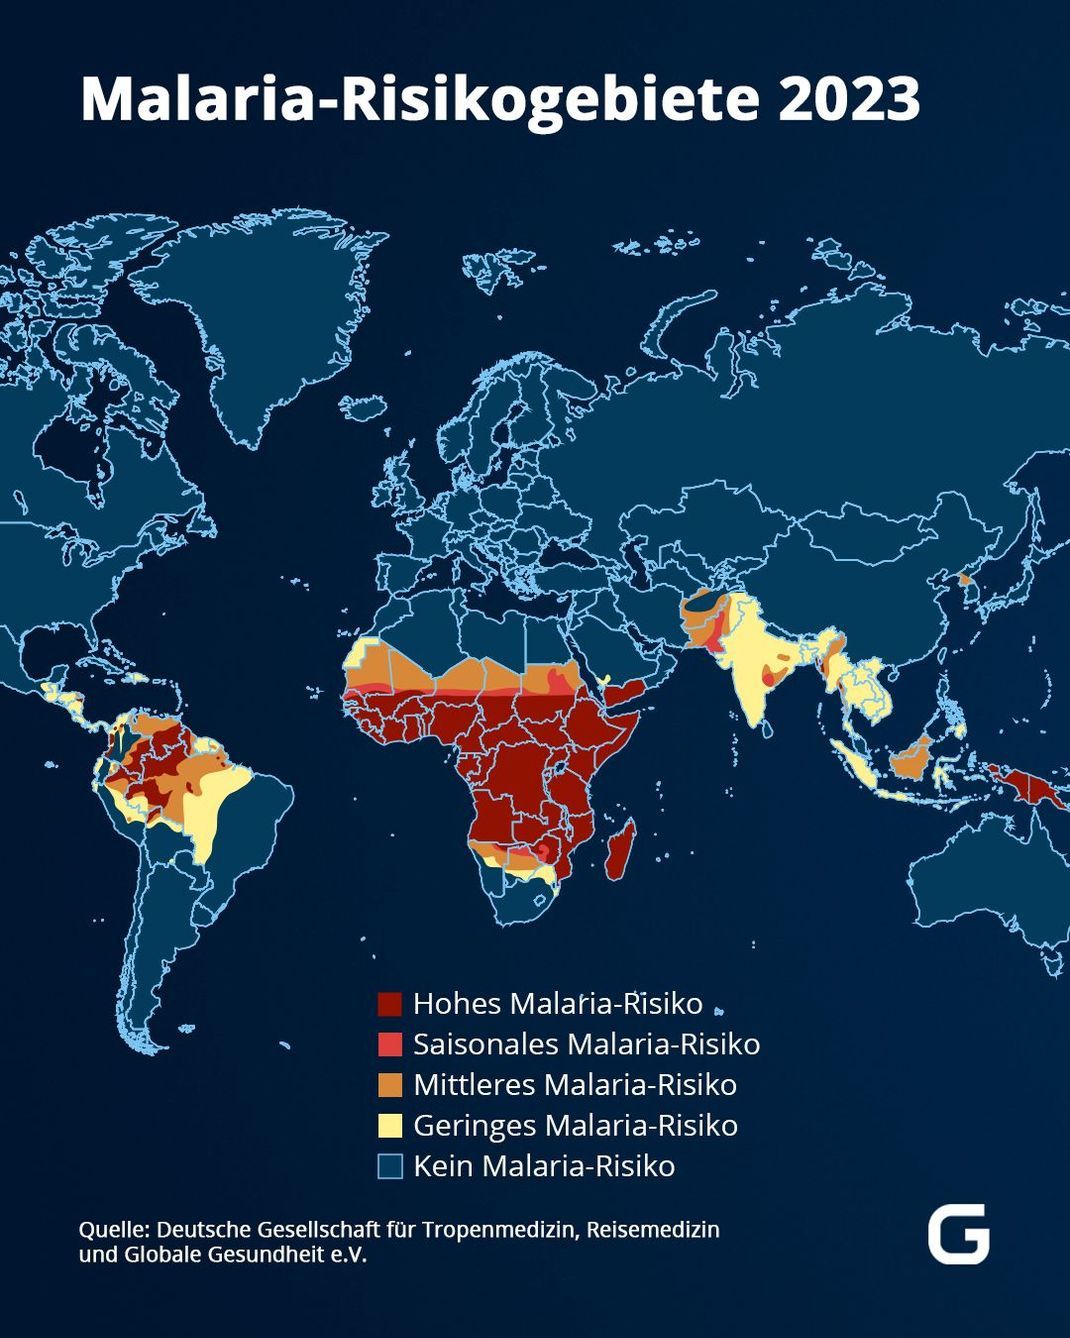 In diesen Gebieten herrscht Malaria-Risiko